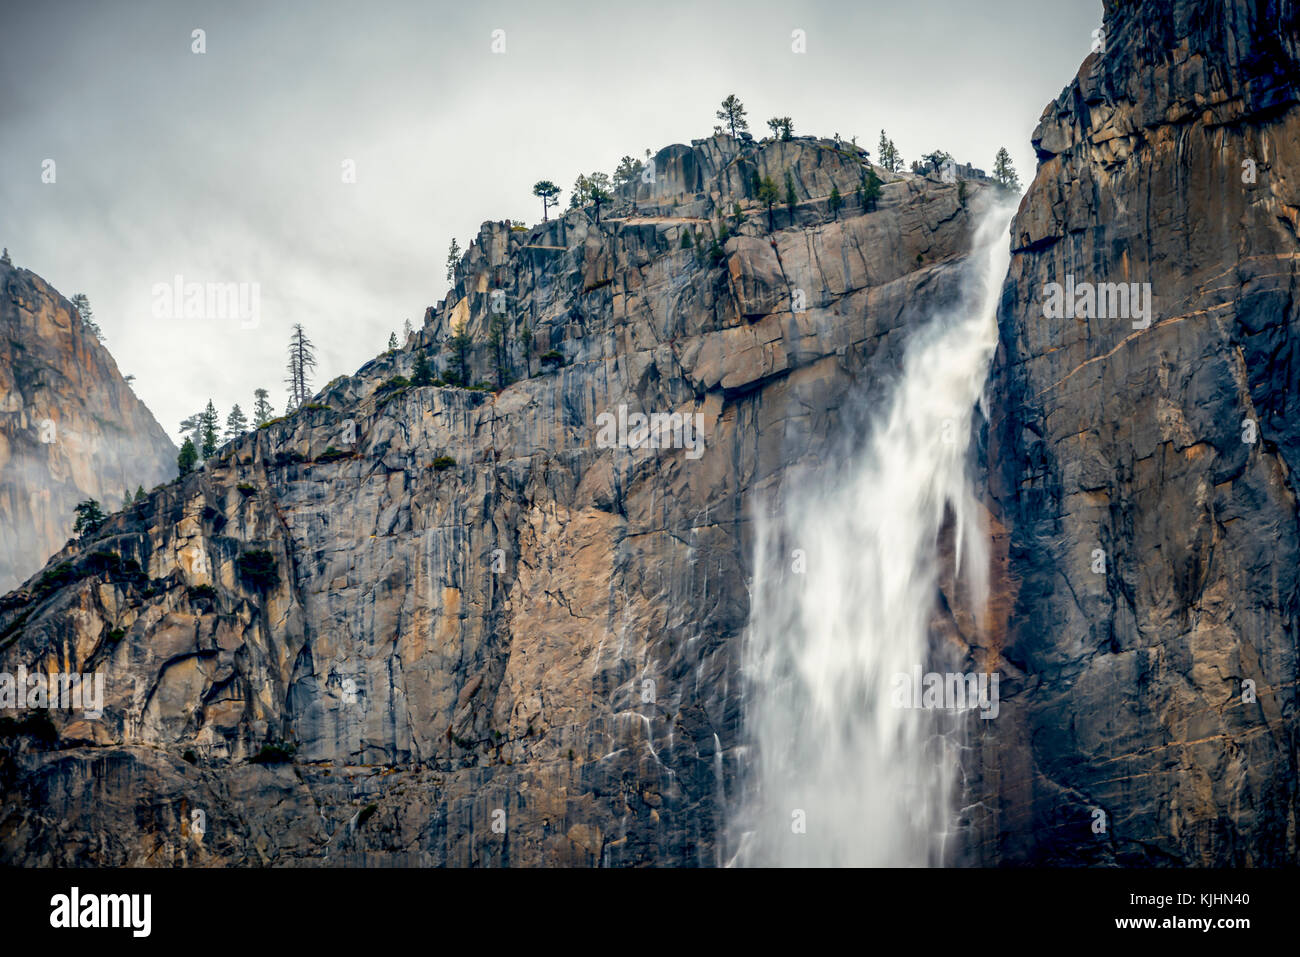 Landscape of Yosemite National Park, California Stock Photo